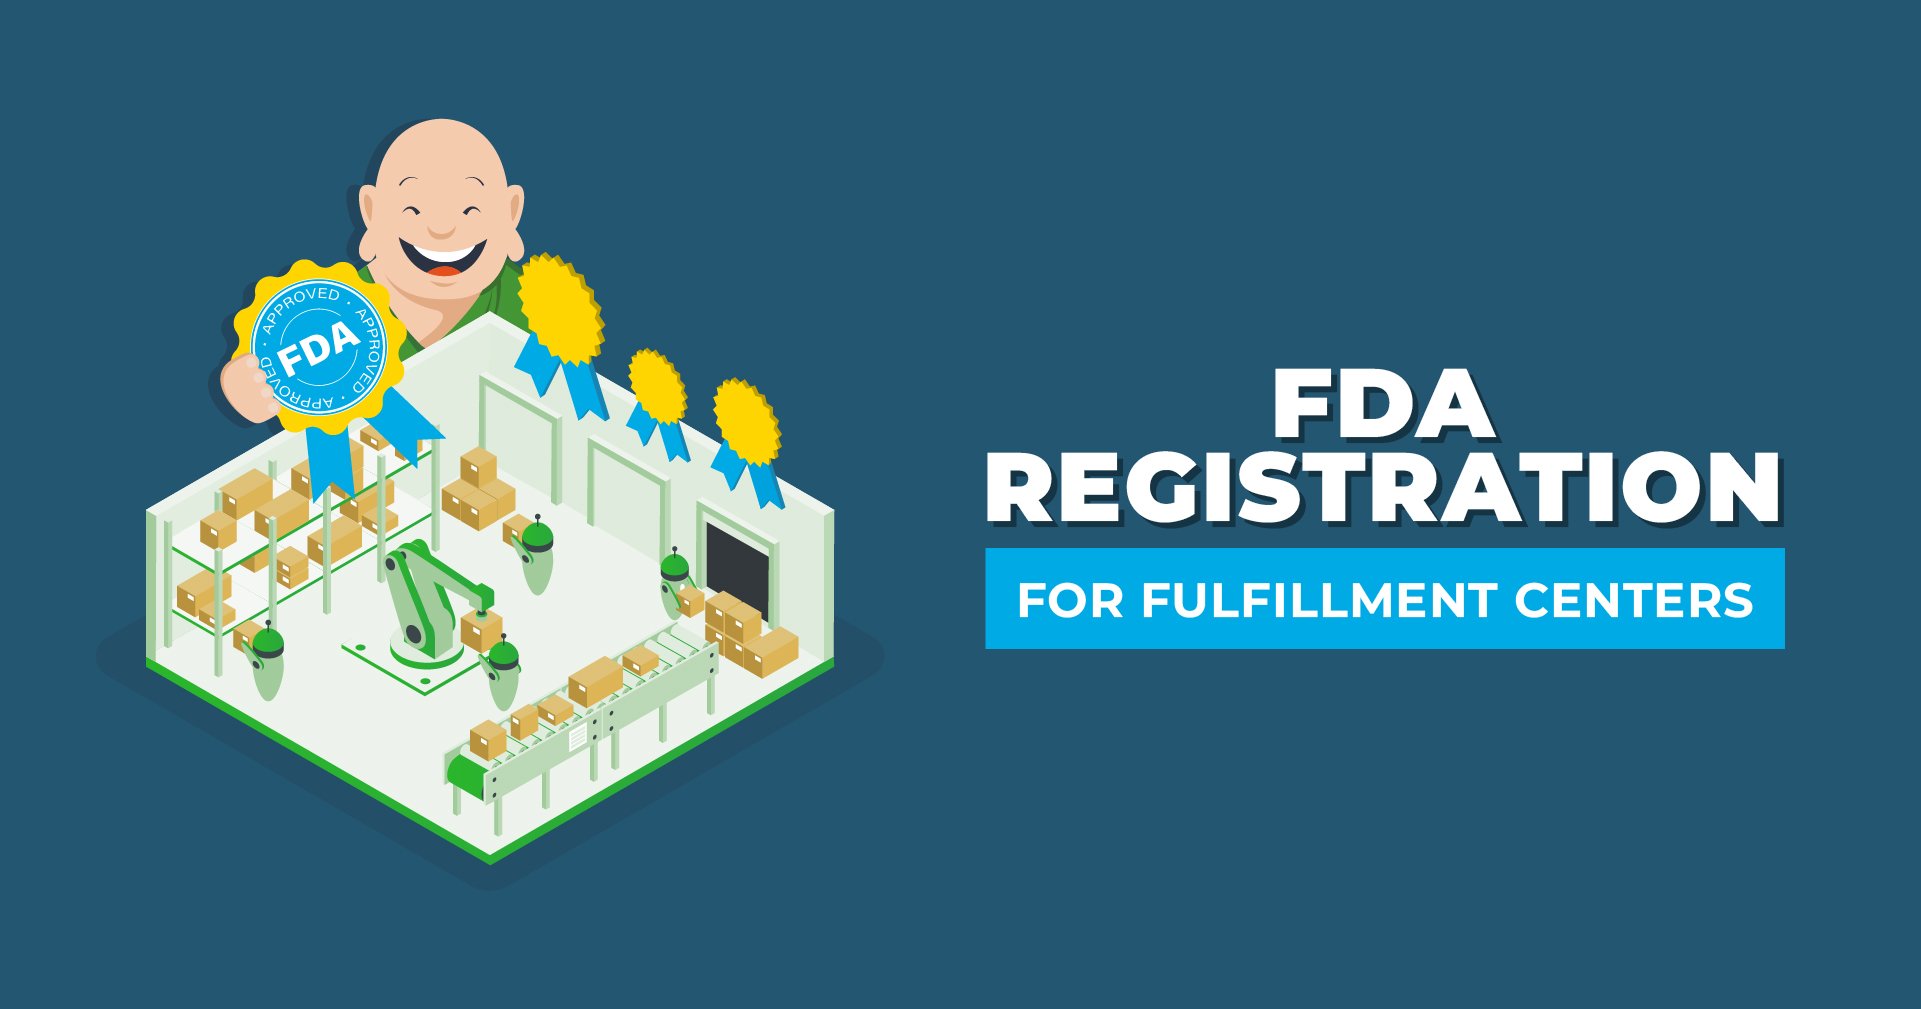 FDA Registration for Fulfillment Centers